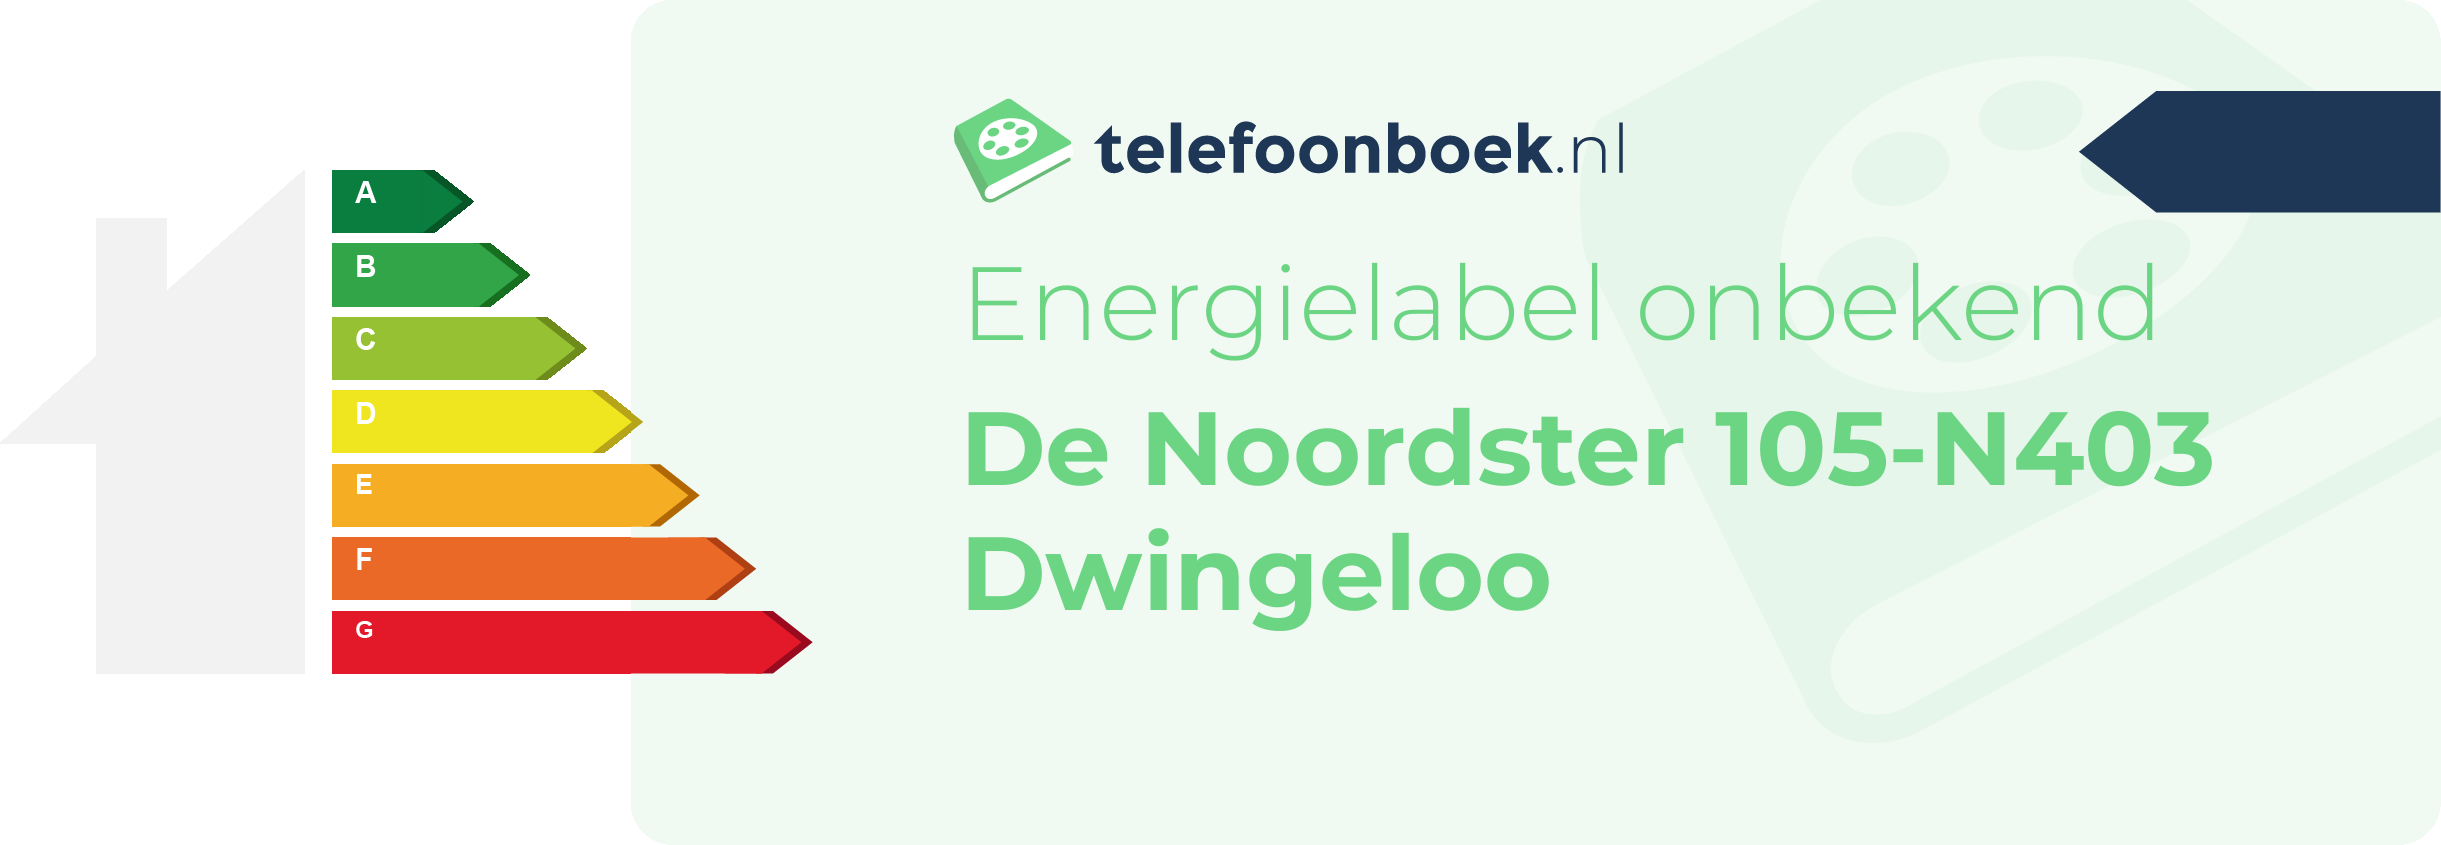 Energielabel De Noordster 105-N403 Dwingeloo